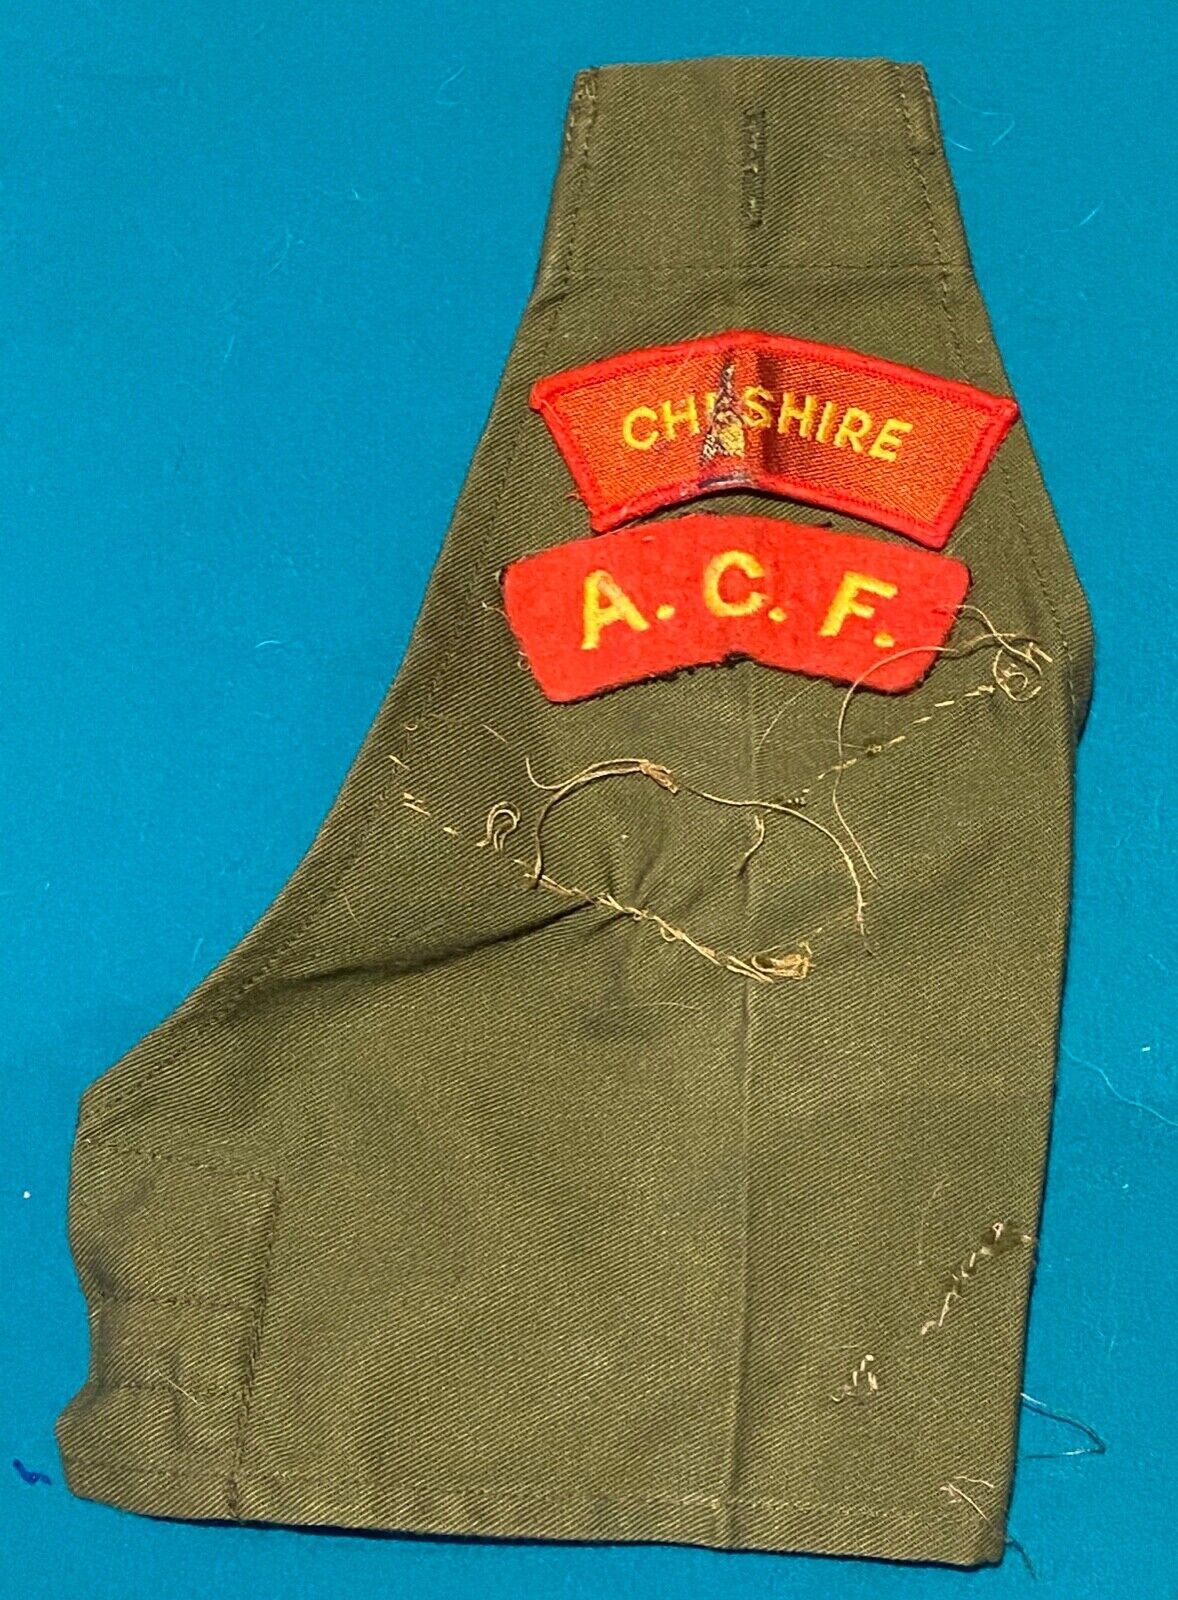 British CHESHIRE ACF shoulder brassard, Cadet Force - used condition ...